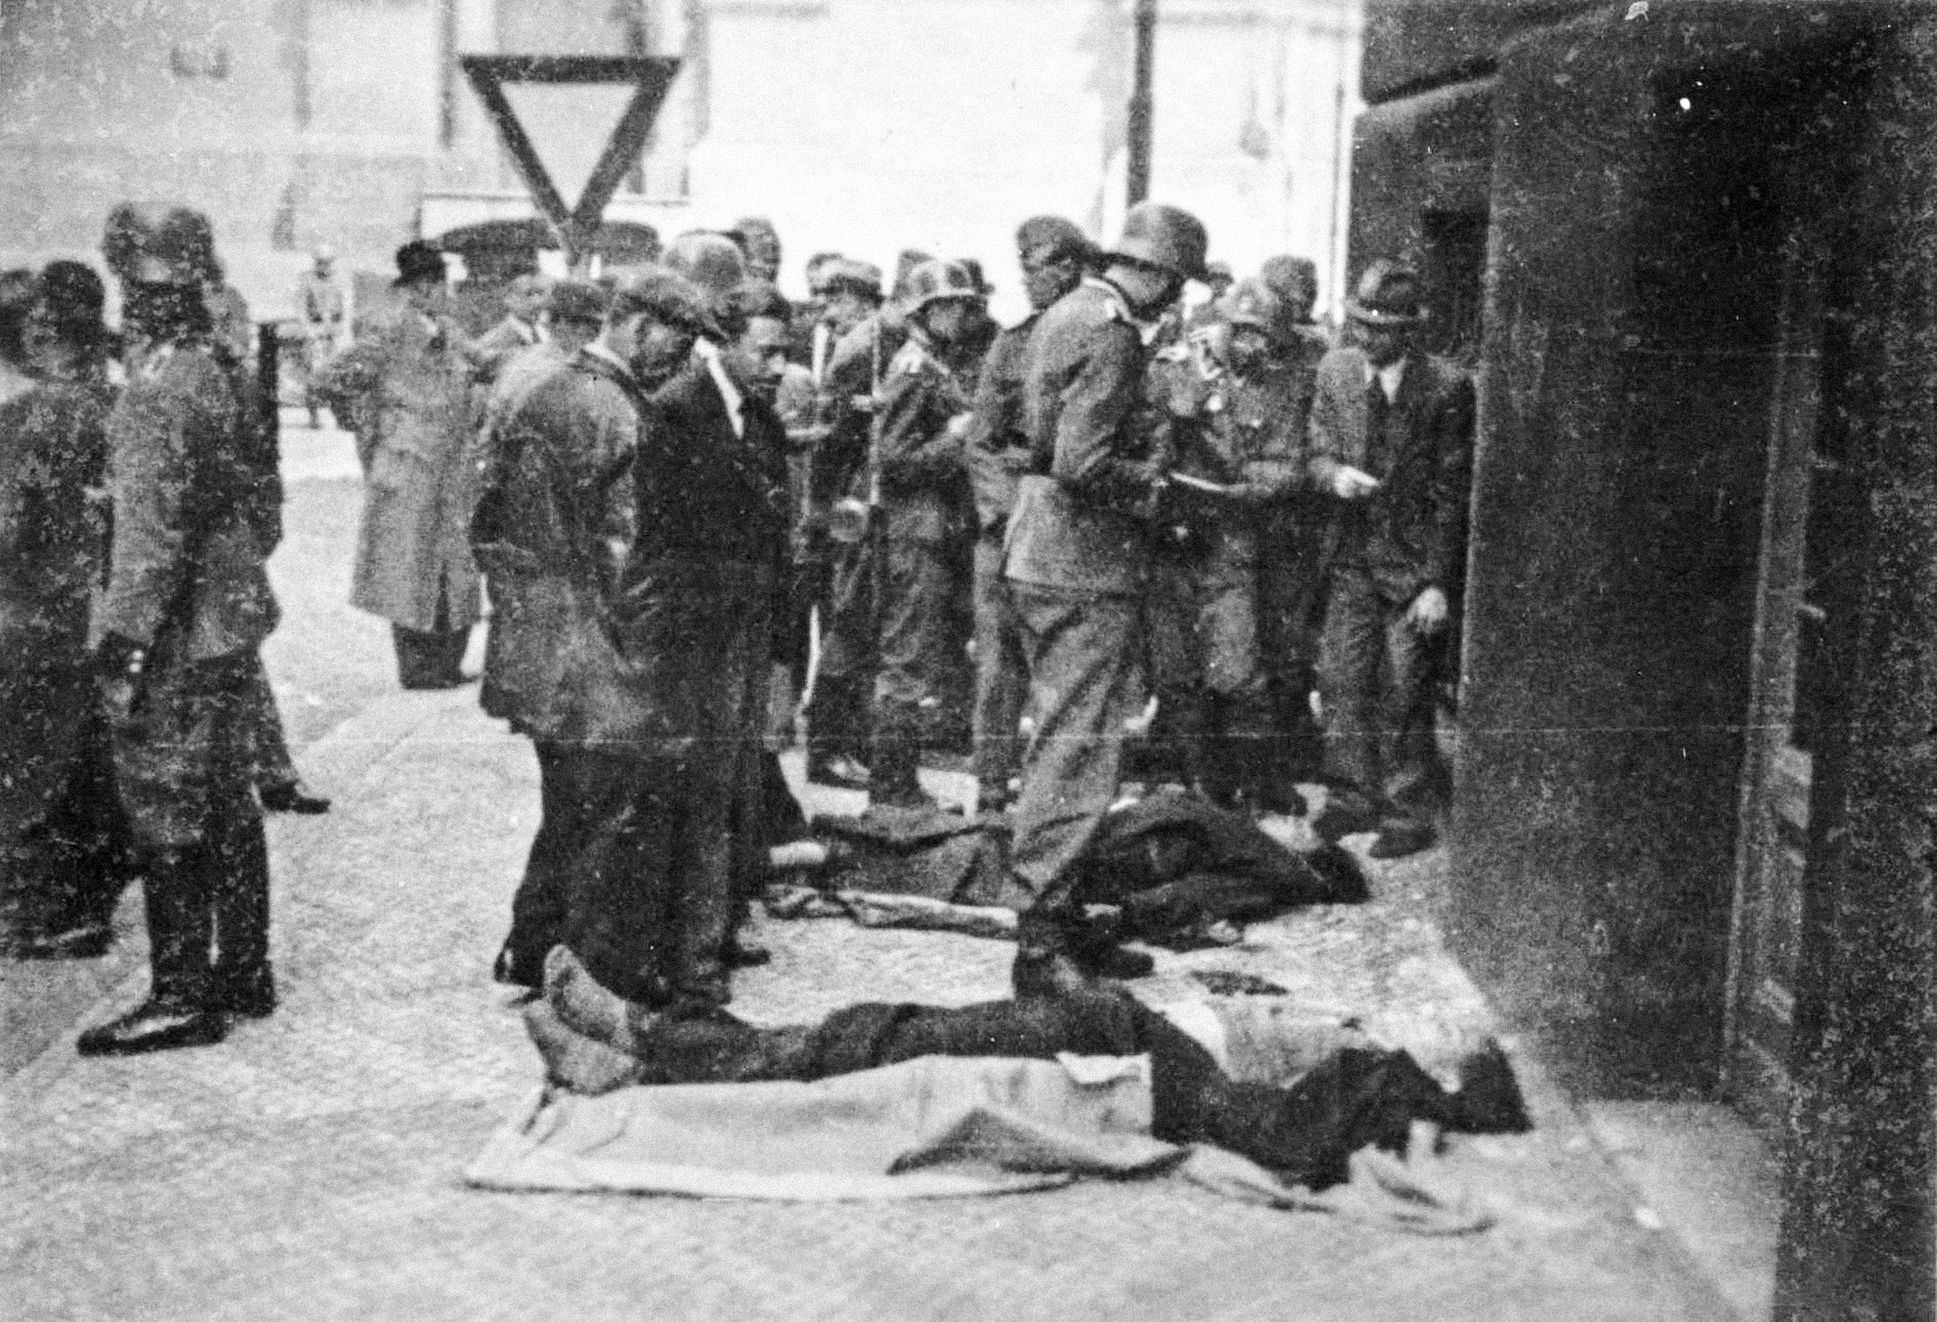 Parašutista, Parašutisté, smrt, atentát na Heydricha, Anthropoid 80